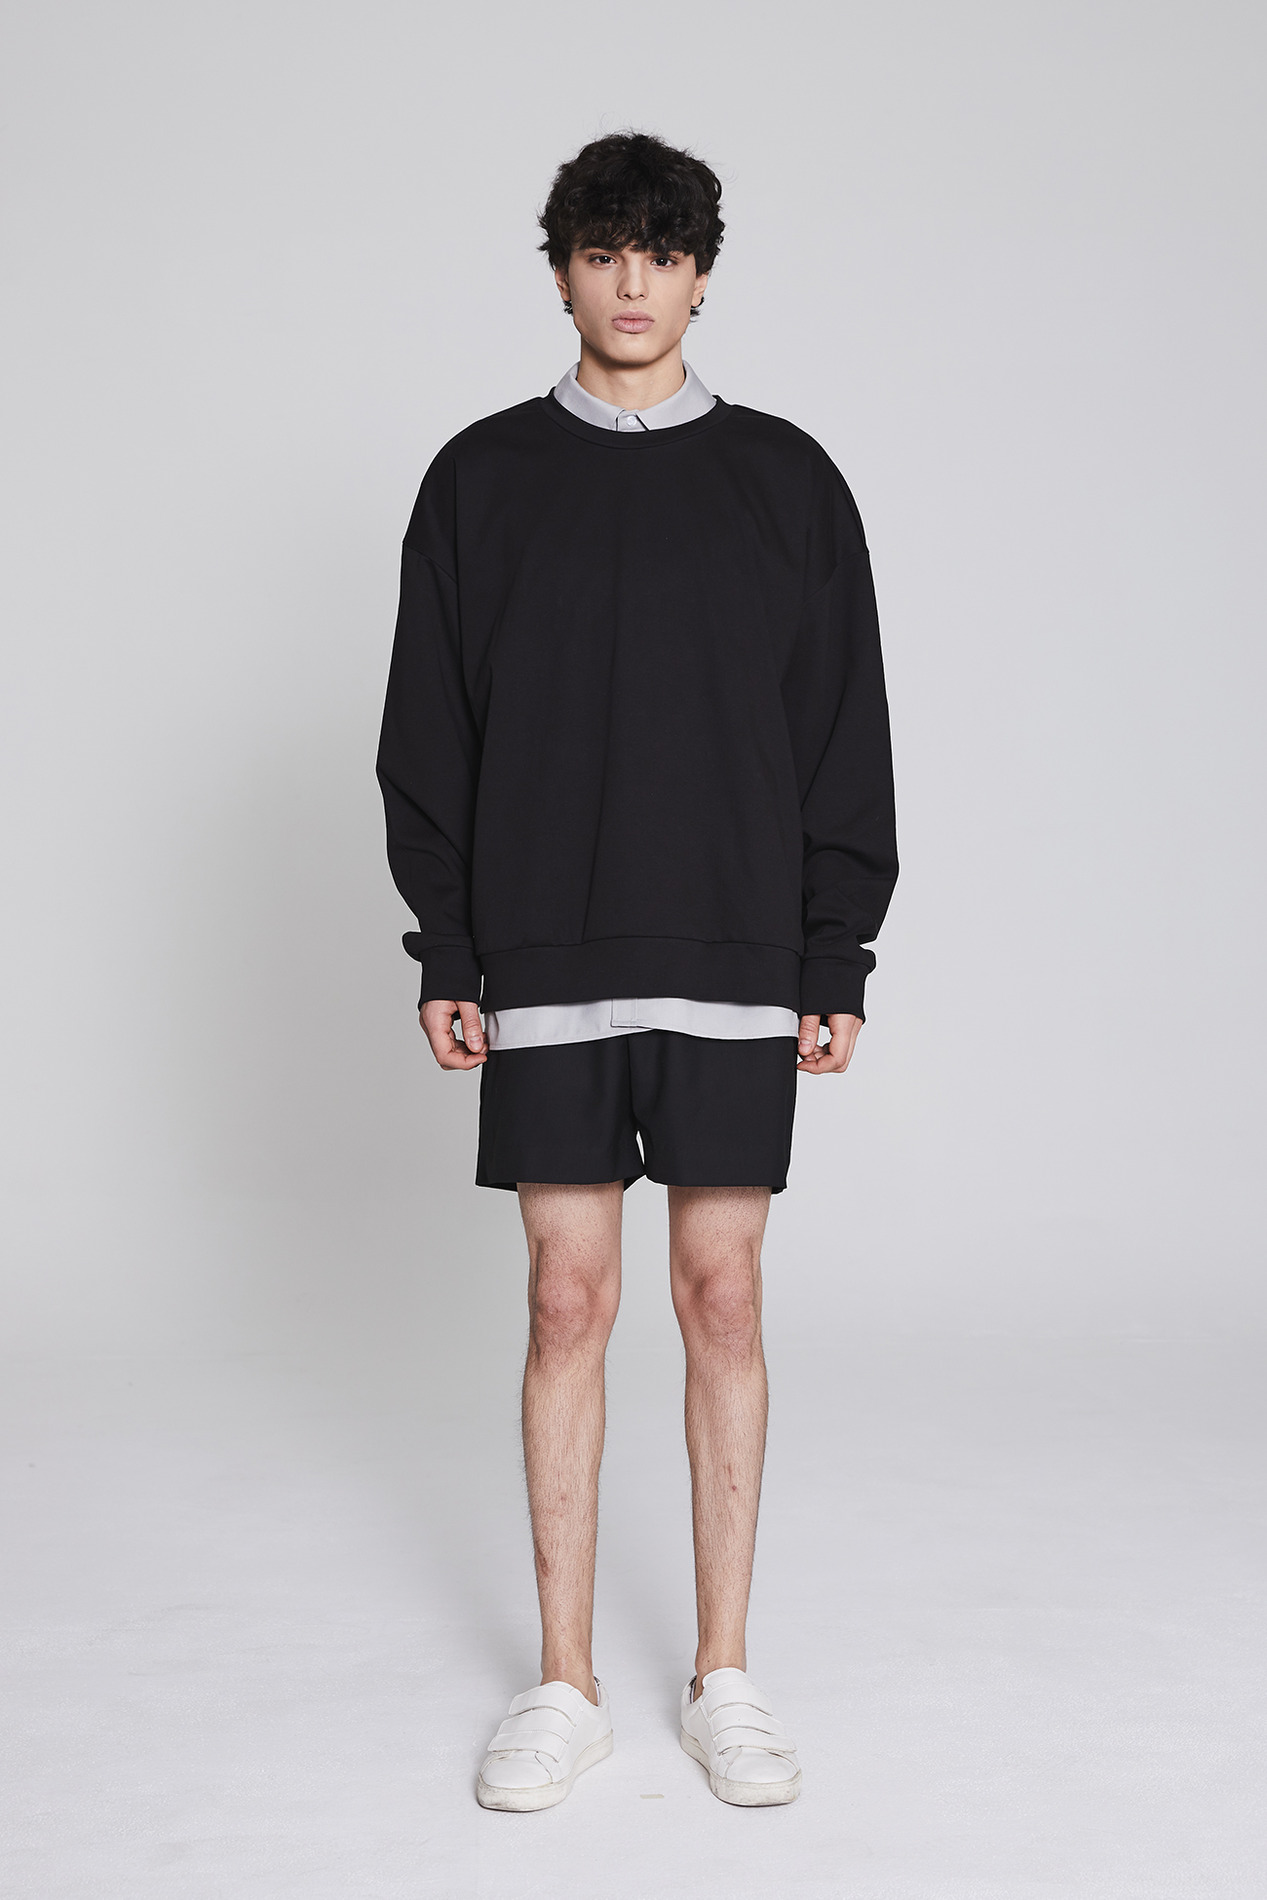 MILLIN Basic sweatshirt(black)